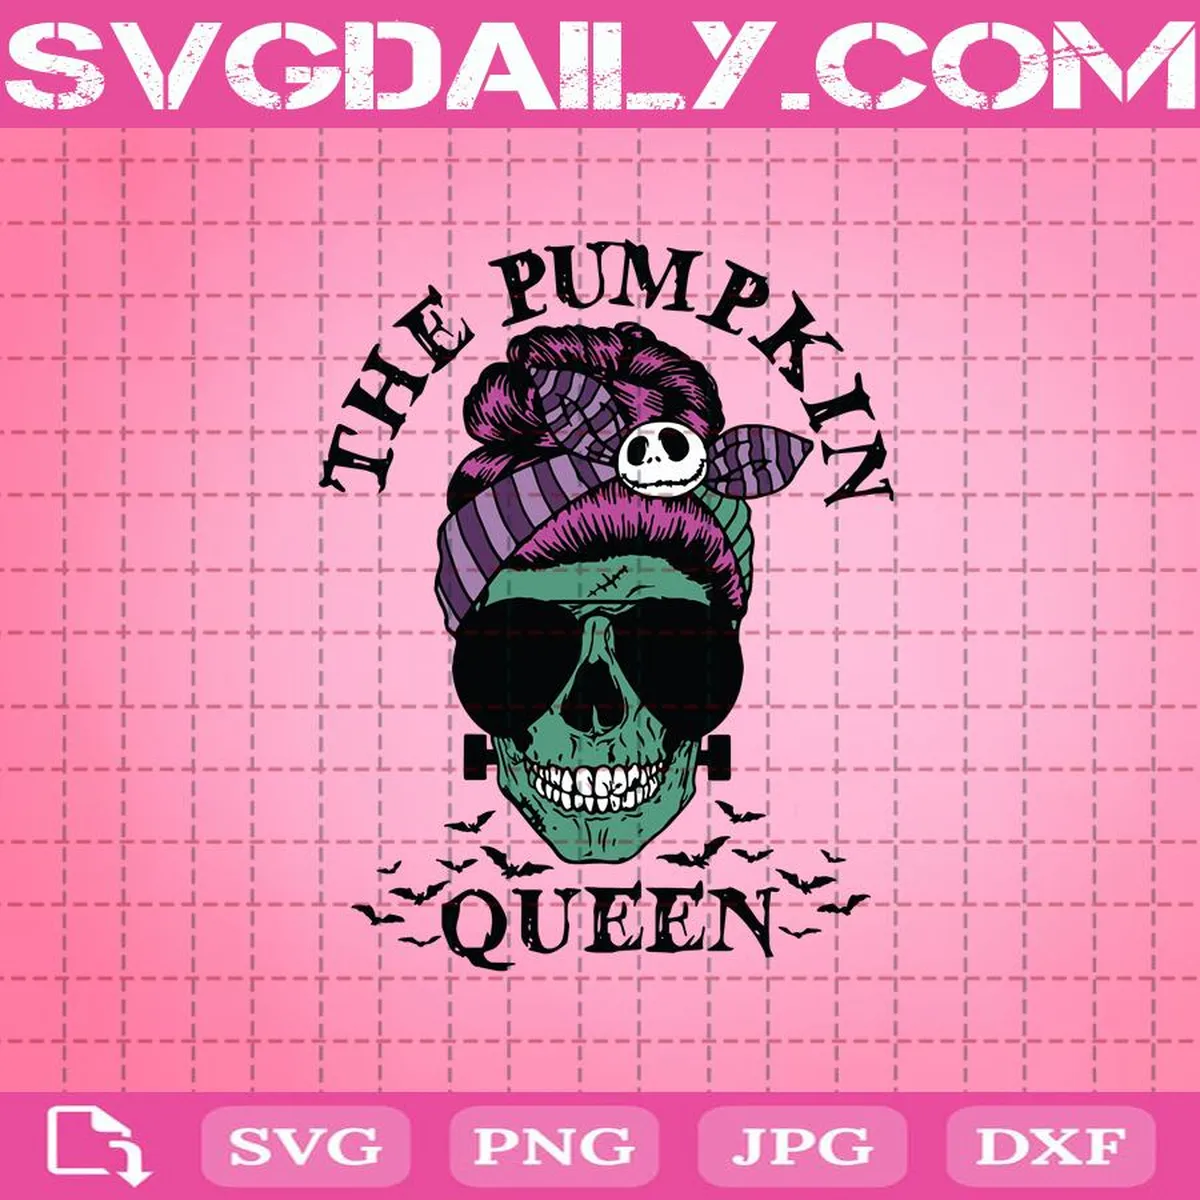 Skull Girl The Pumpkin Svg, The Pumkin Queen Svg, Skull Svg, Skull Queen Svg, Skull Wear Glasses Svg, Jack Skellington Svg